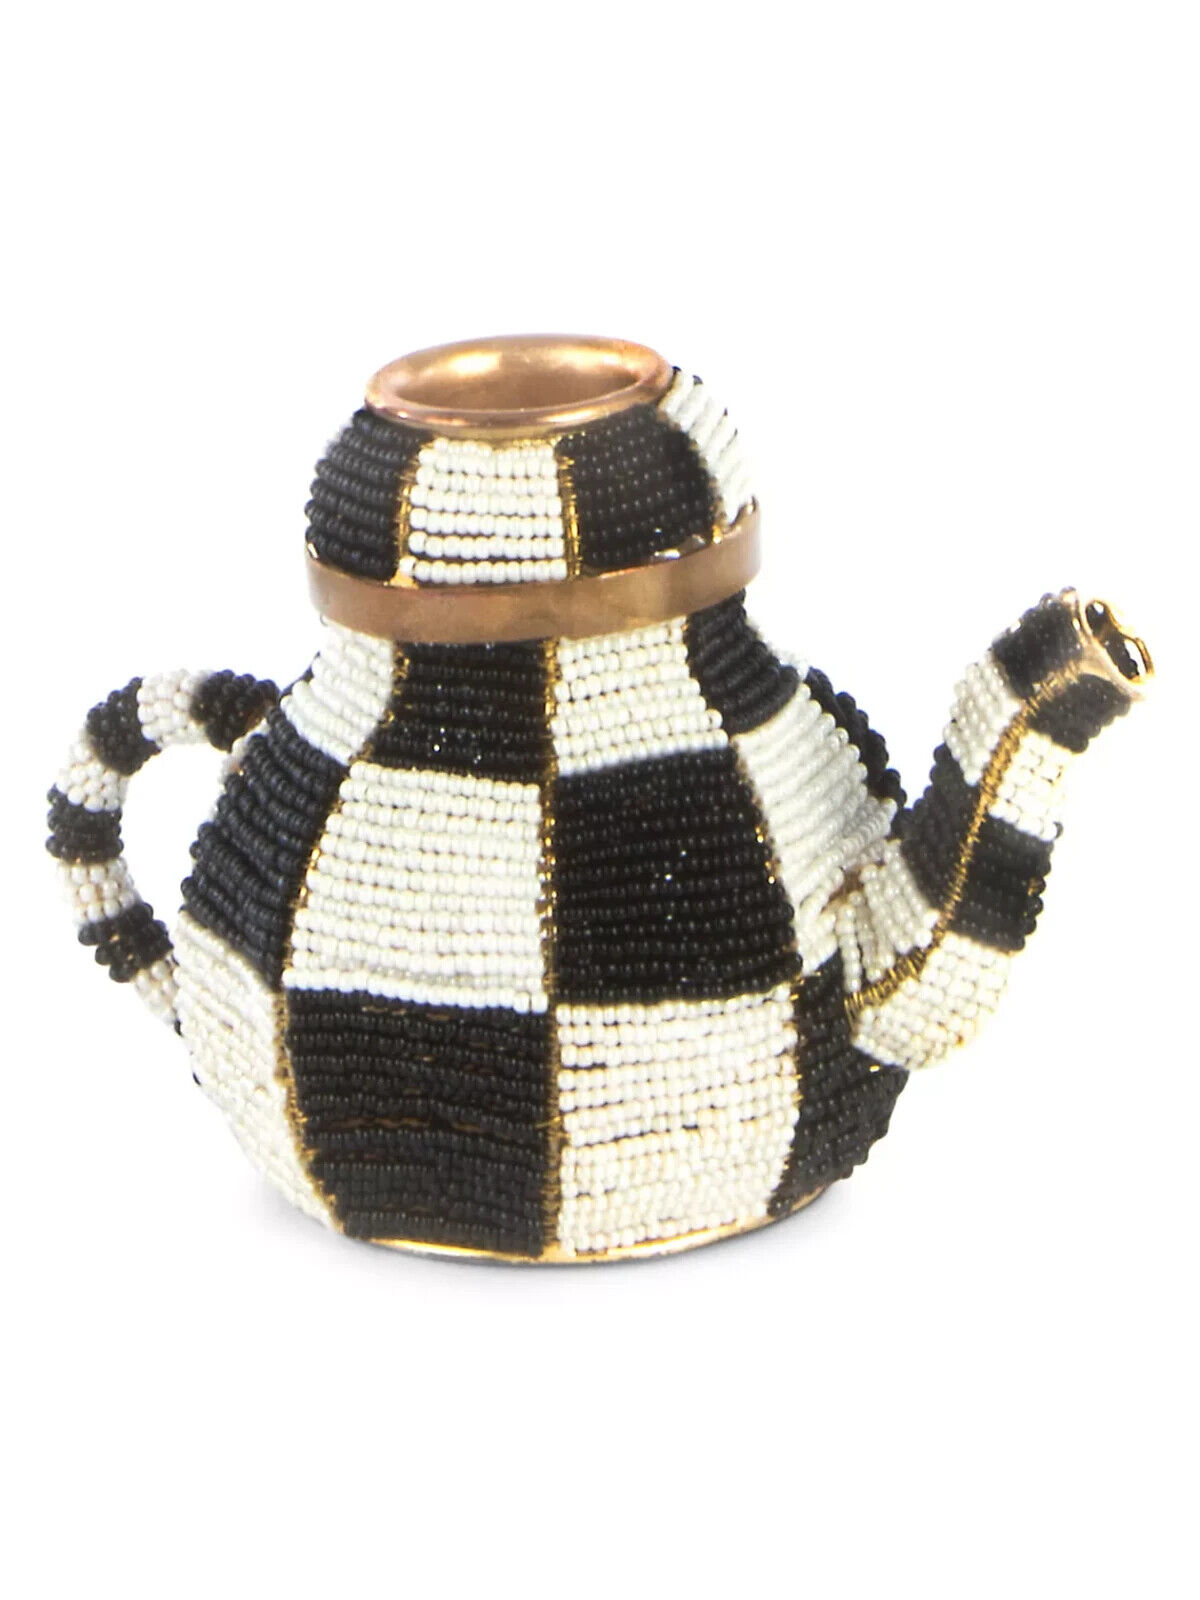 Brand New MacKenzie-Childs Teapot Candle Holder